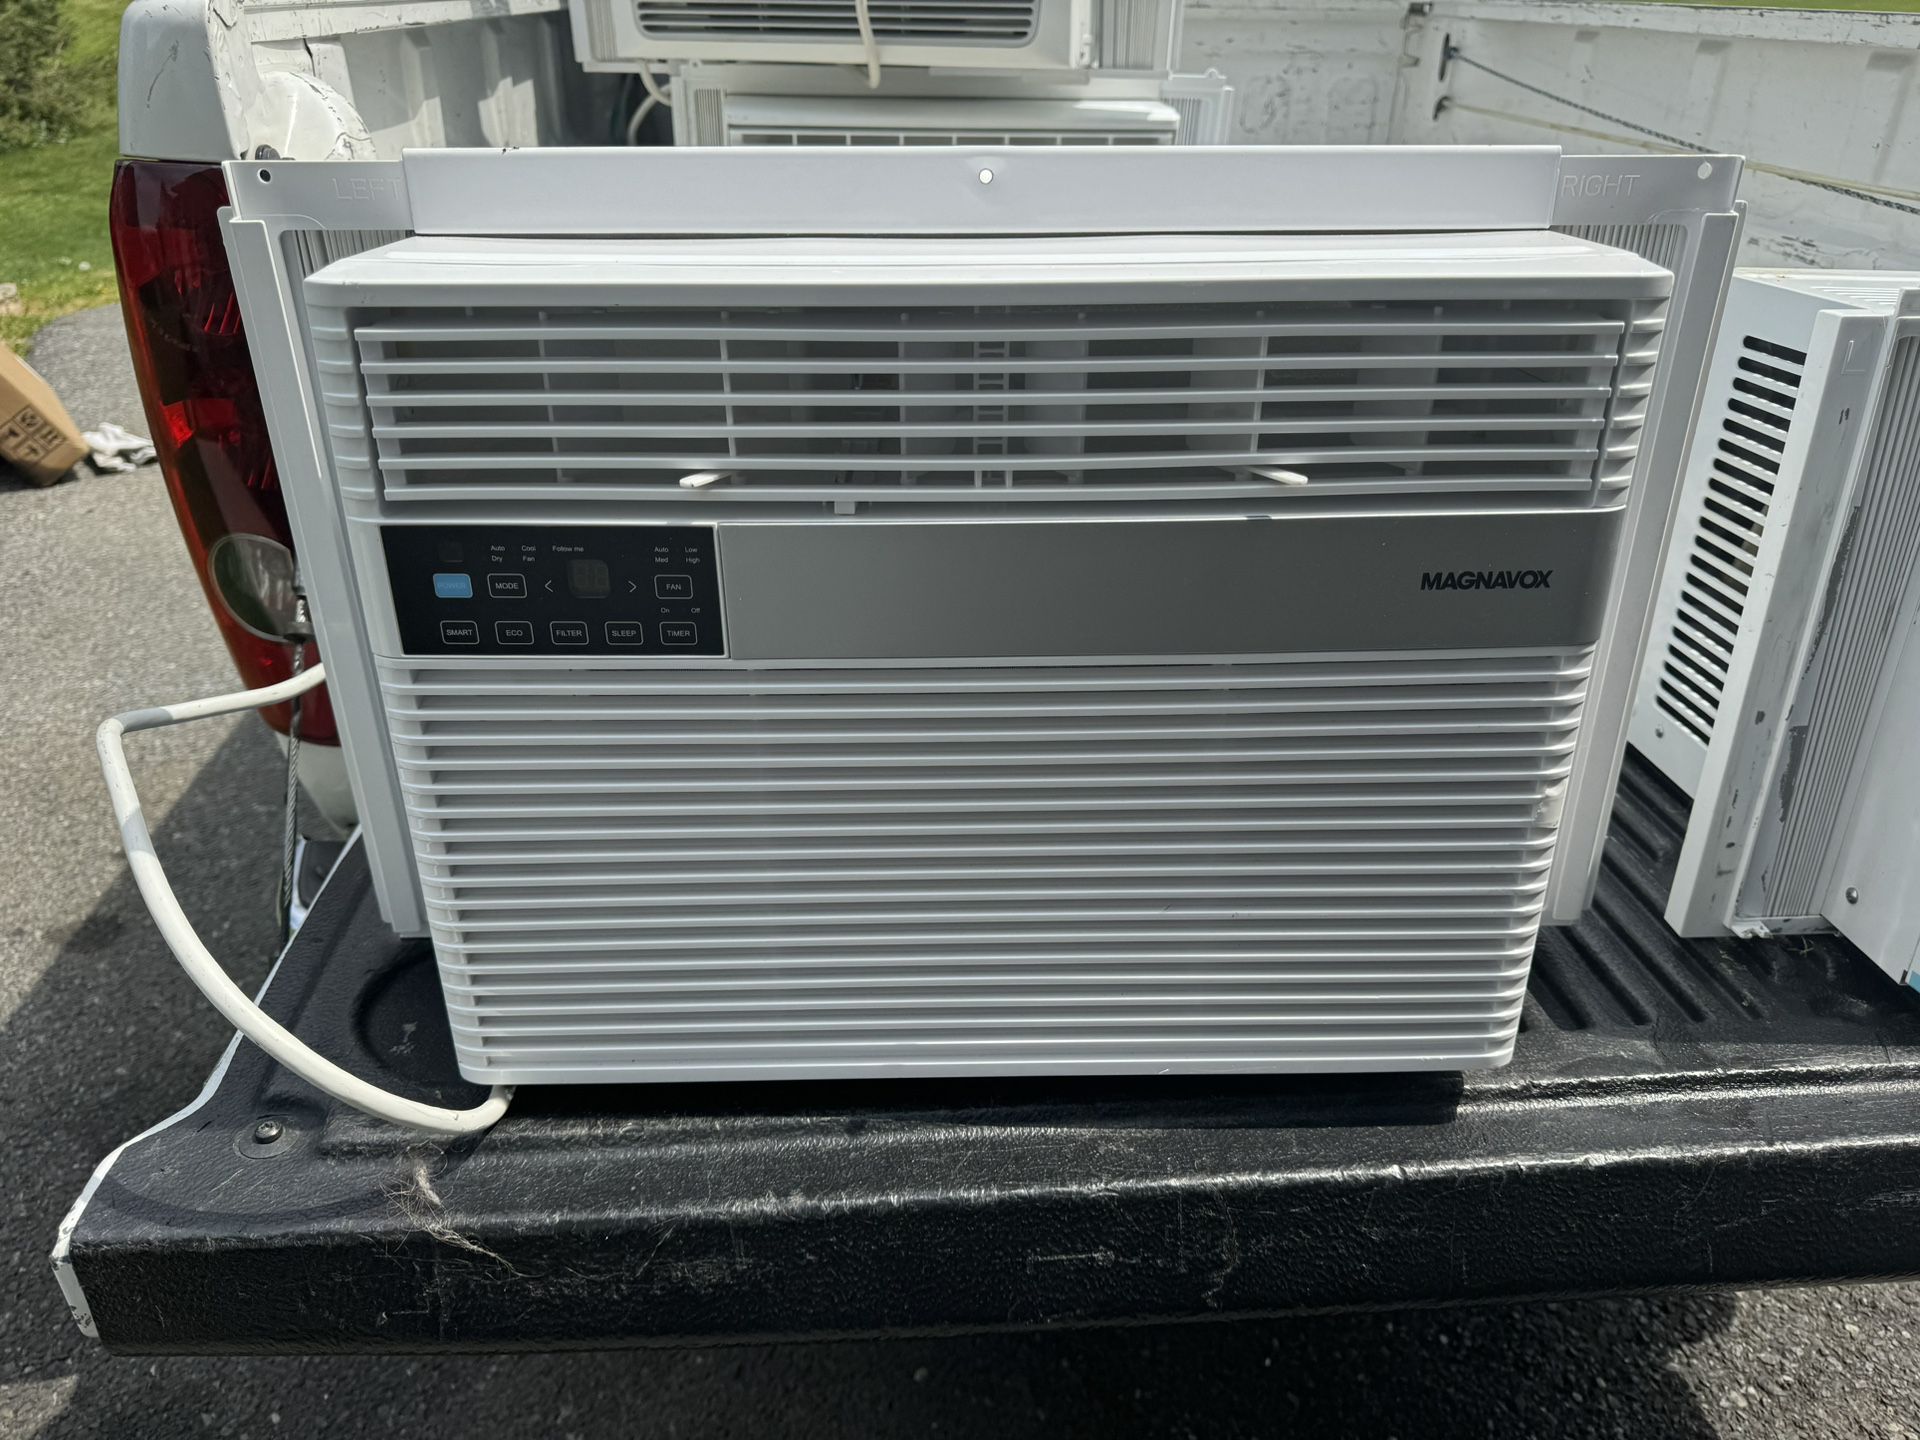 12000 btu air conditioner 225 no less new condition